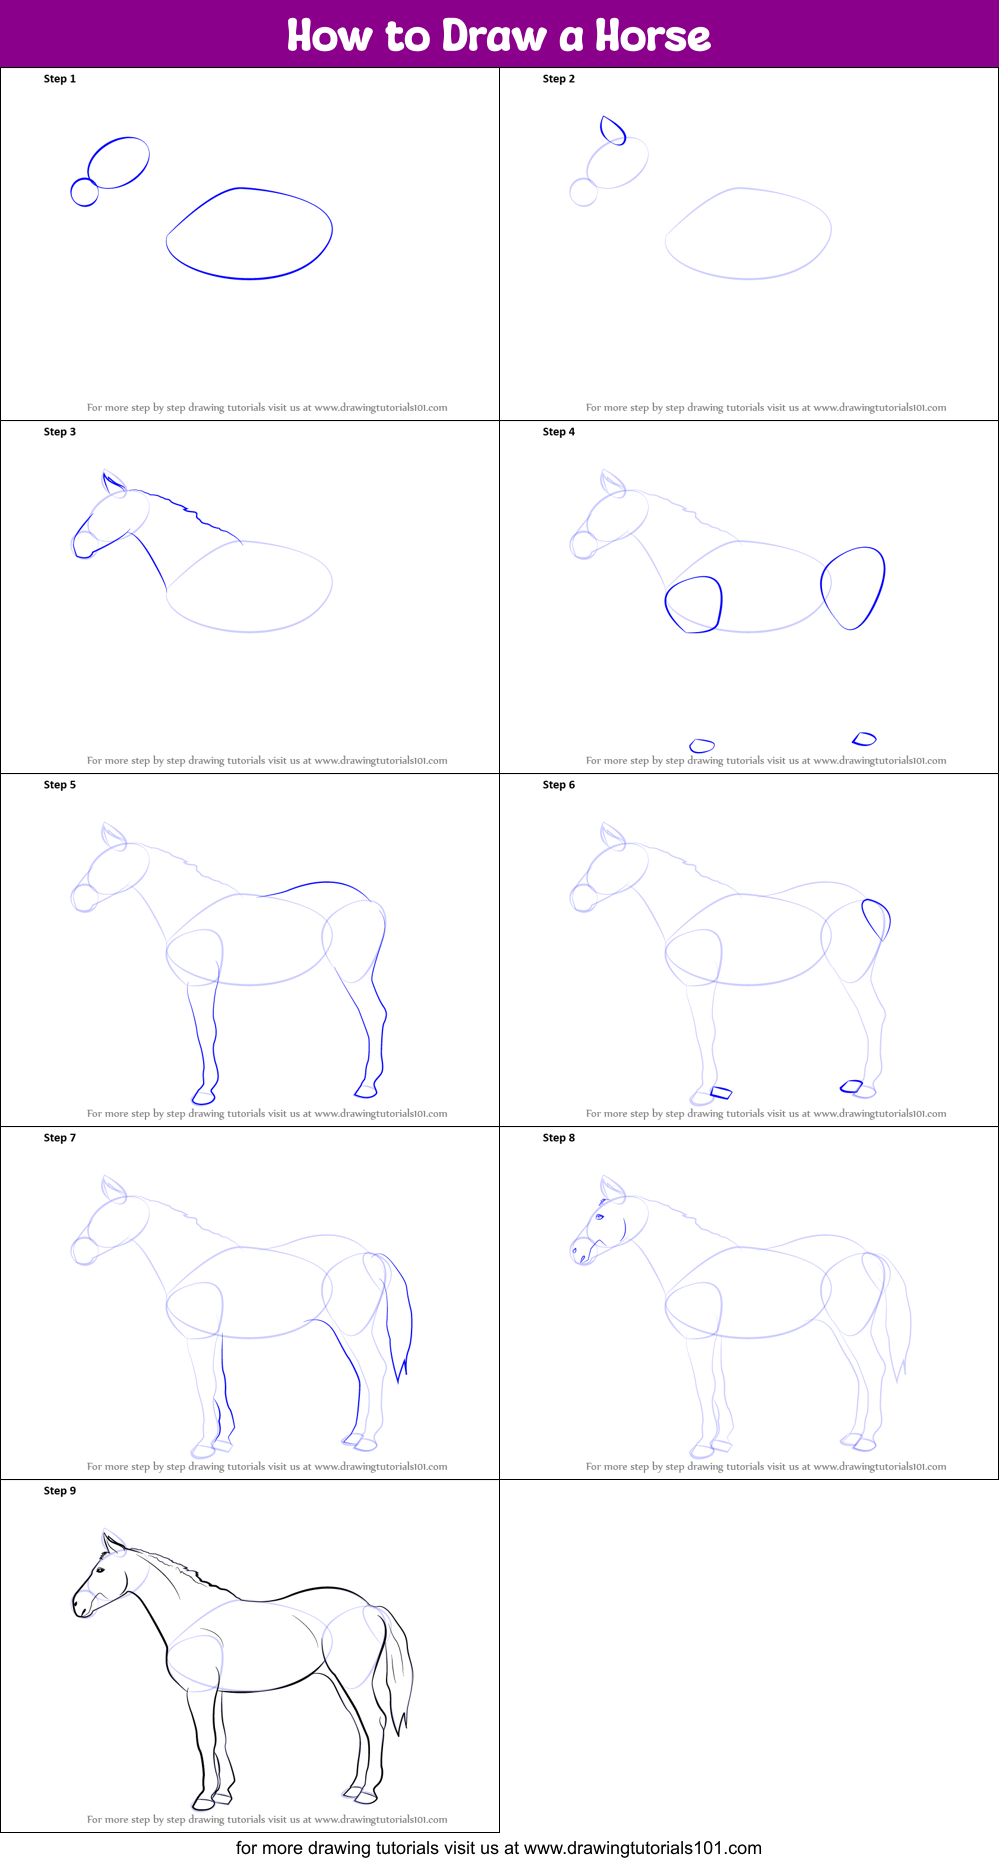 How to Draw a Horse (Farm Animals) Step by Step | DrawingTutorials101.com